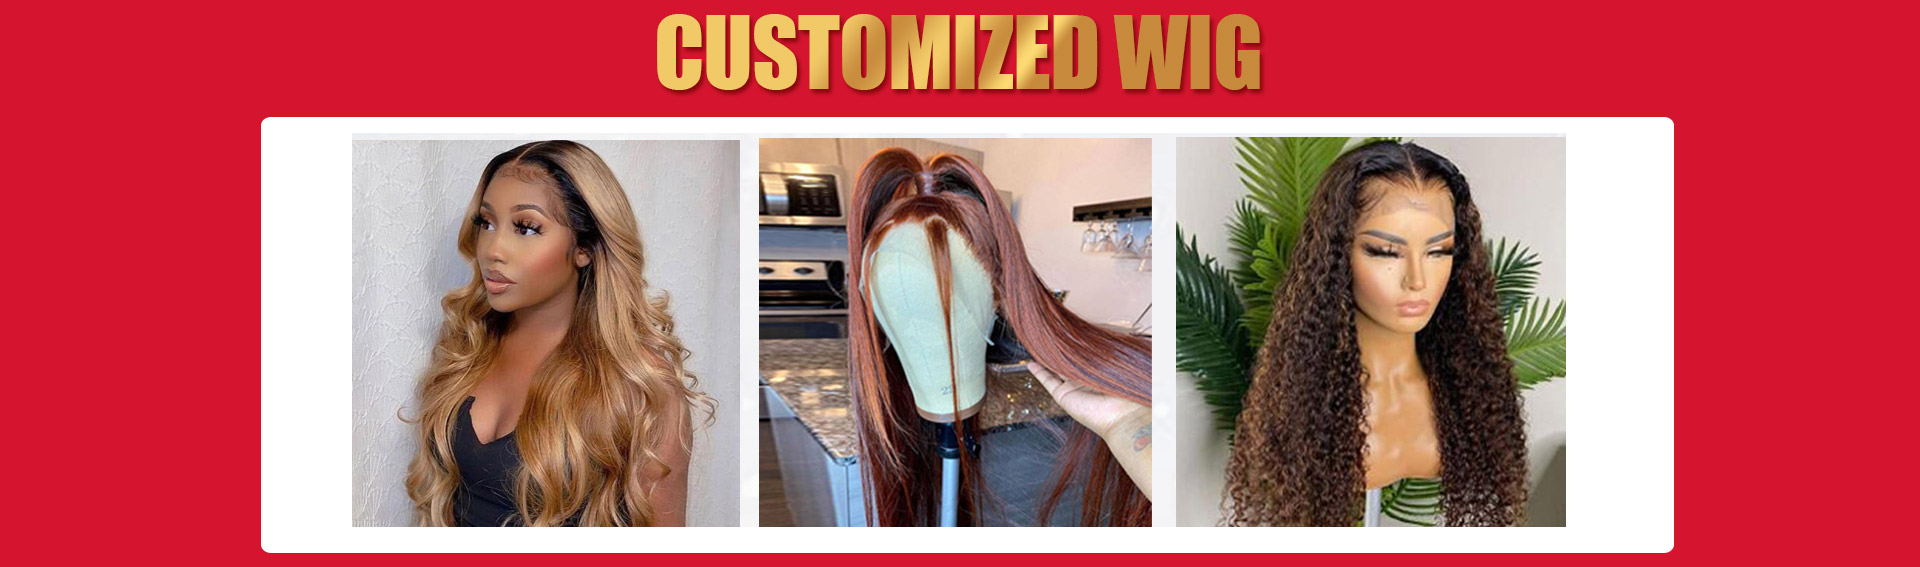 customized-wigs